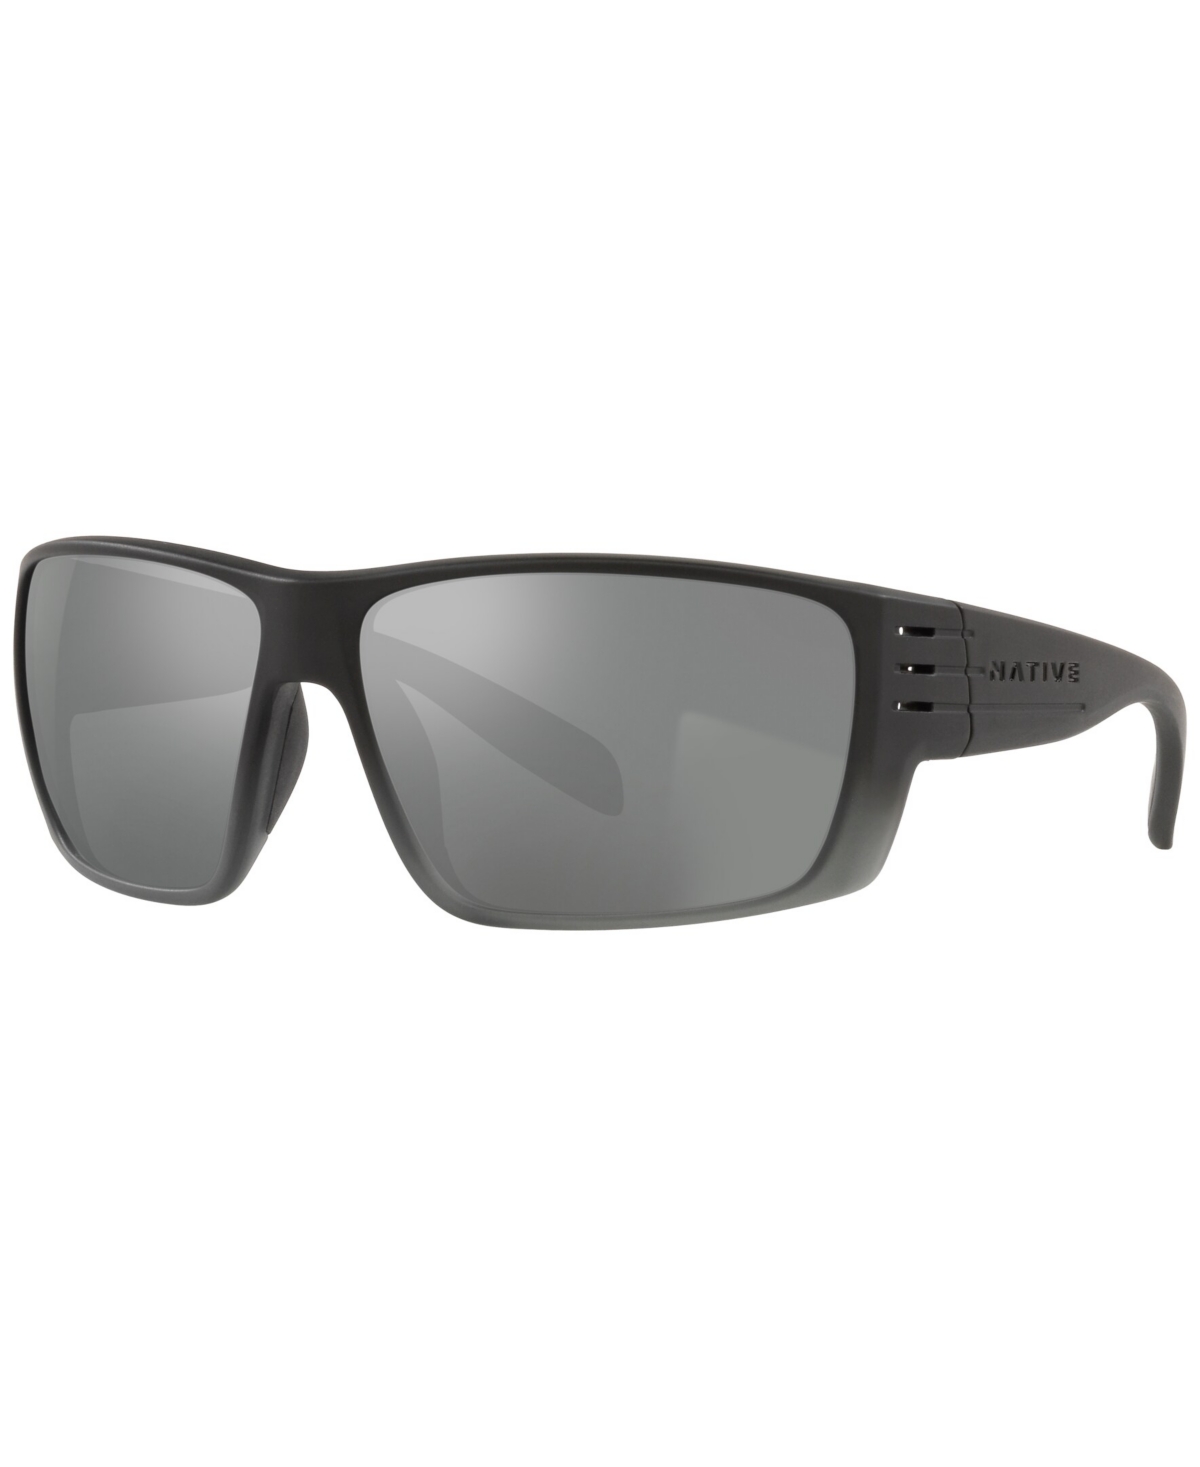 Unisex Polarized Sunglasses, Griz - Smoke Fade